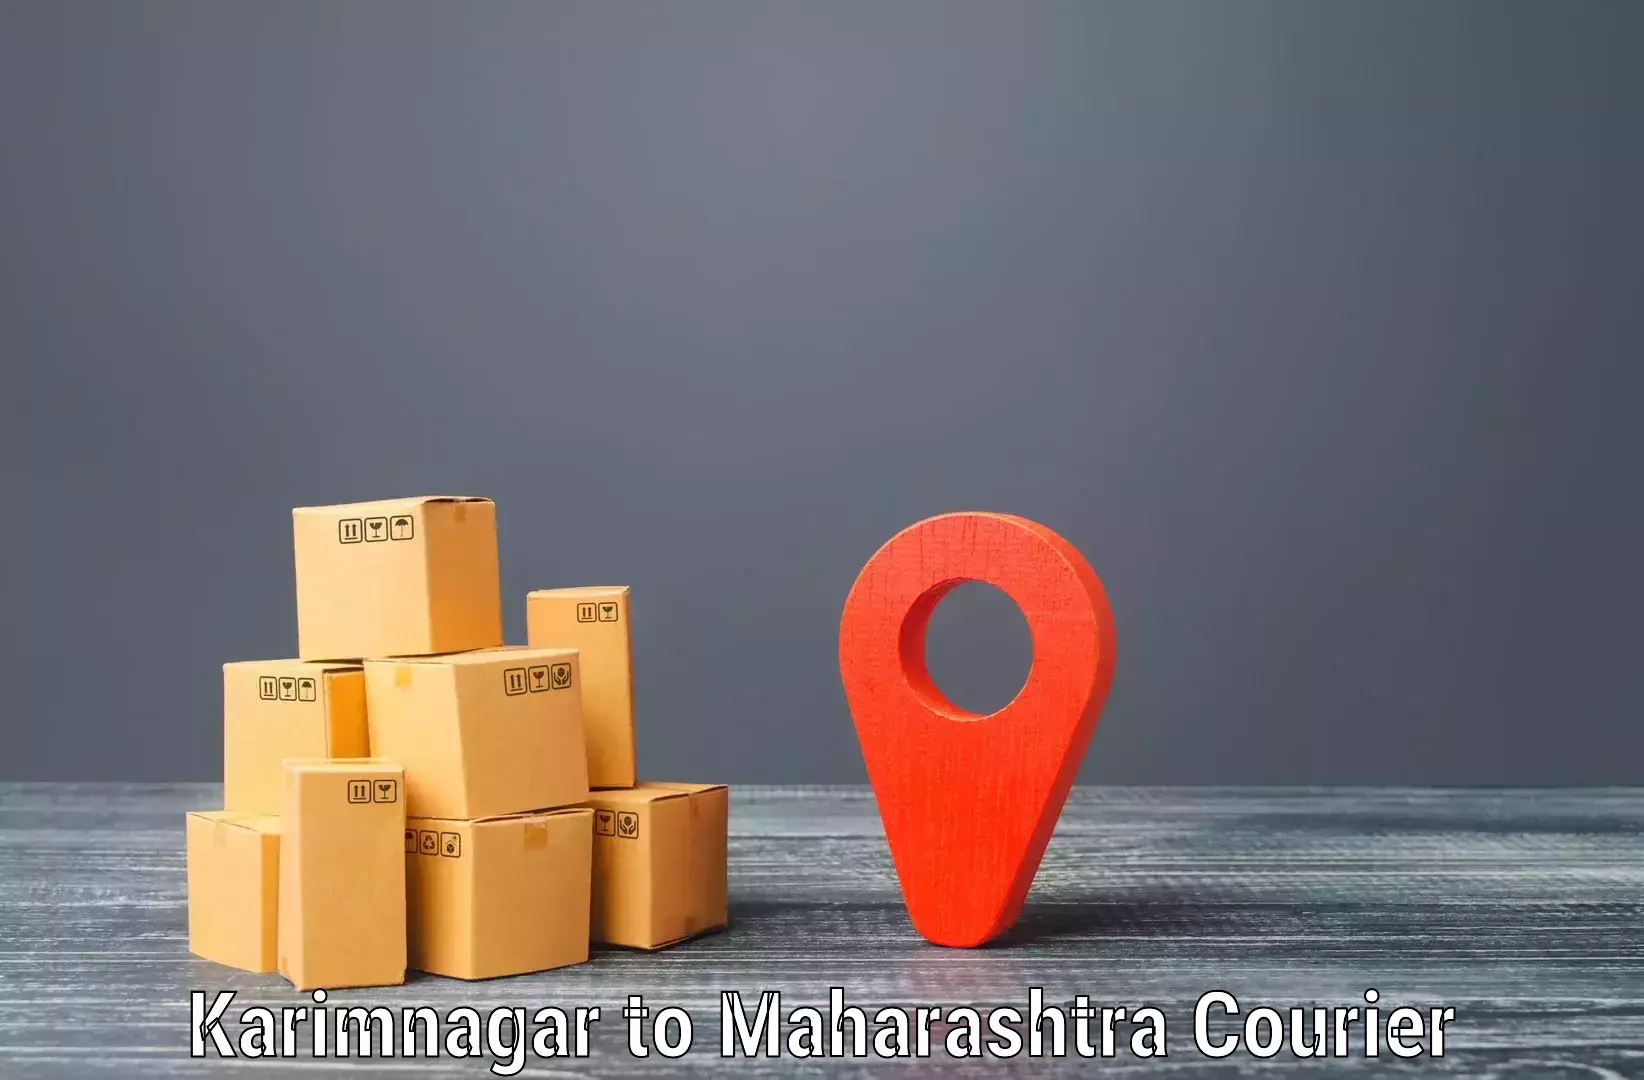 Logistics service provider Karimnagar to Chinchbunder